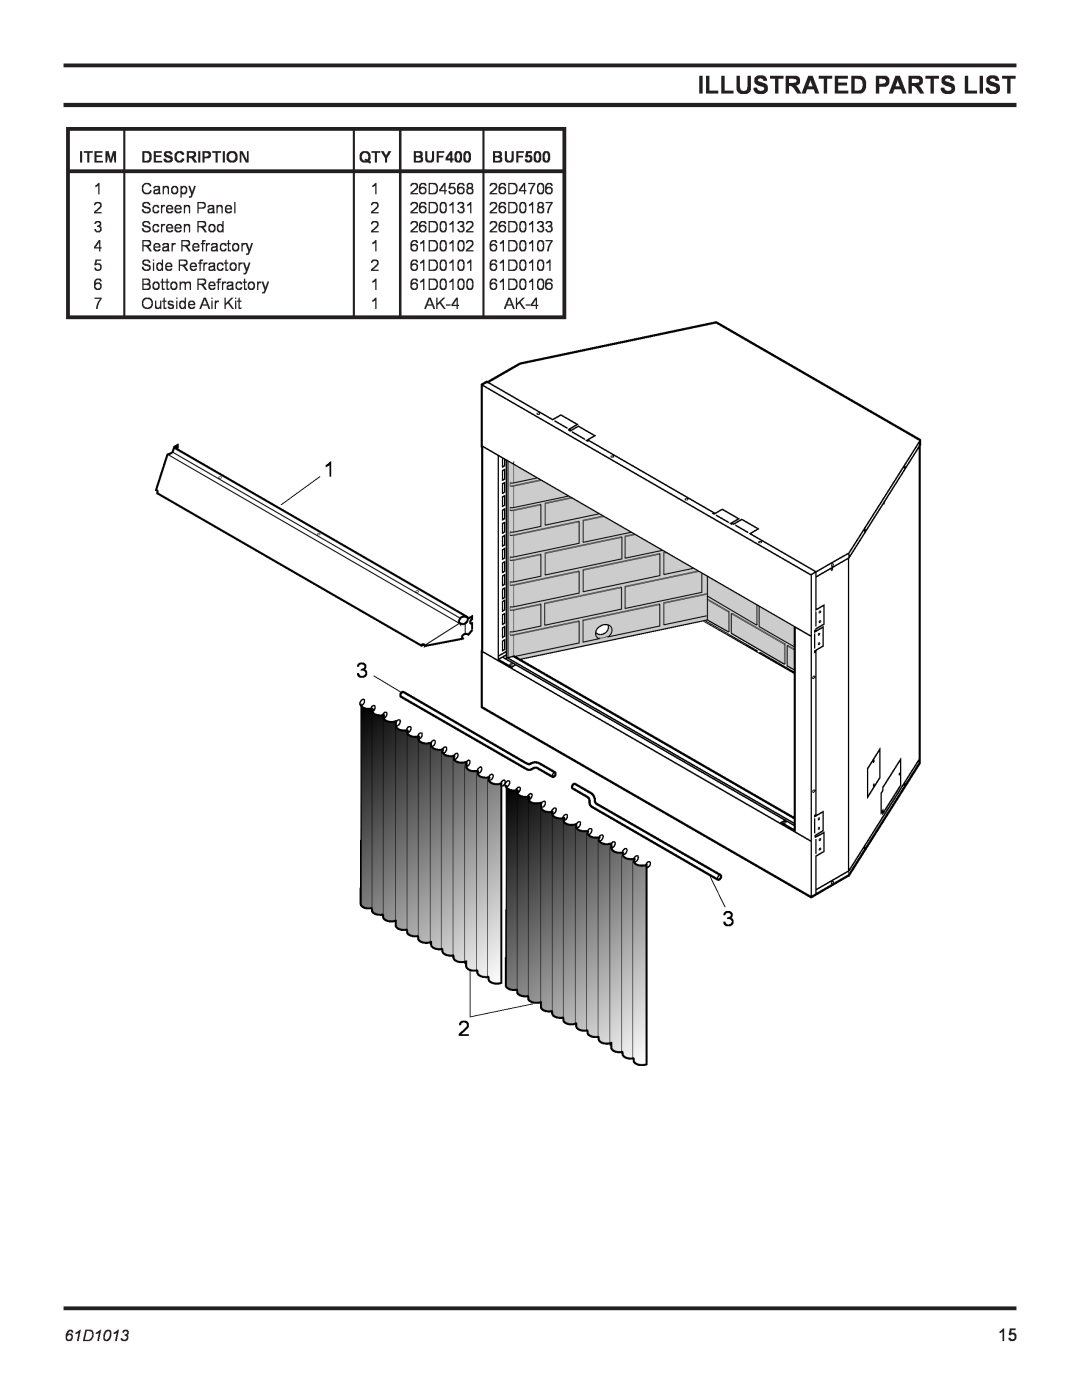 Monessen Hearth BUF400 manual illustrated parts list, Description, BUF500, 61D1013 